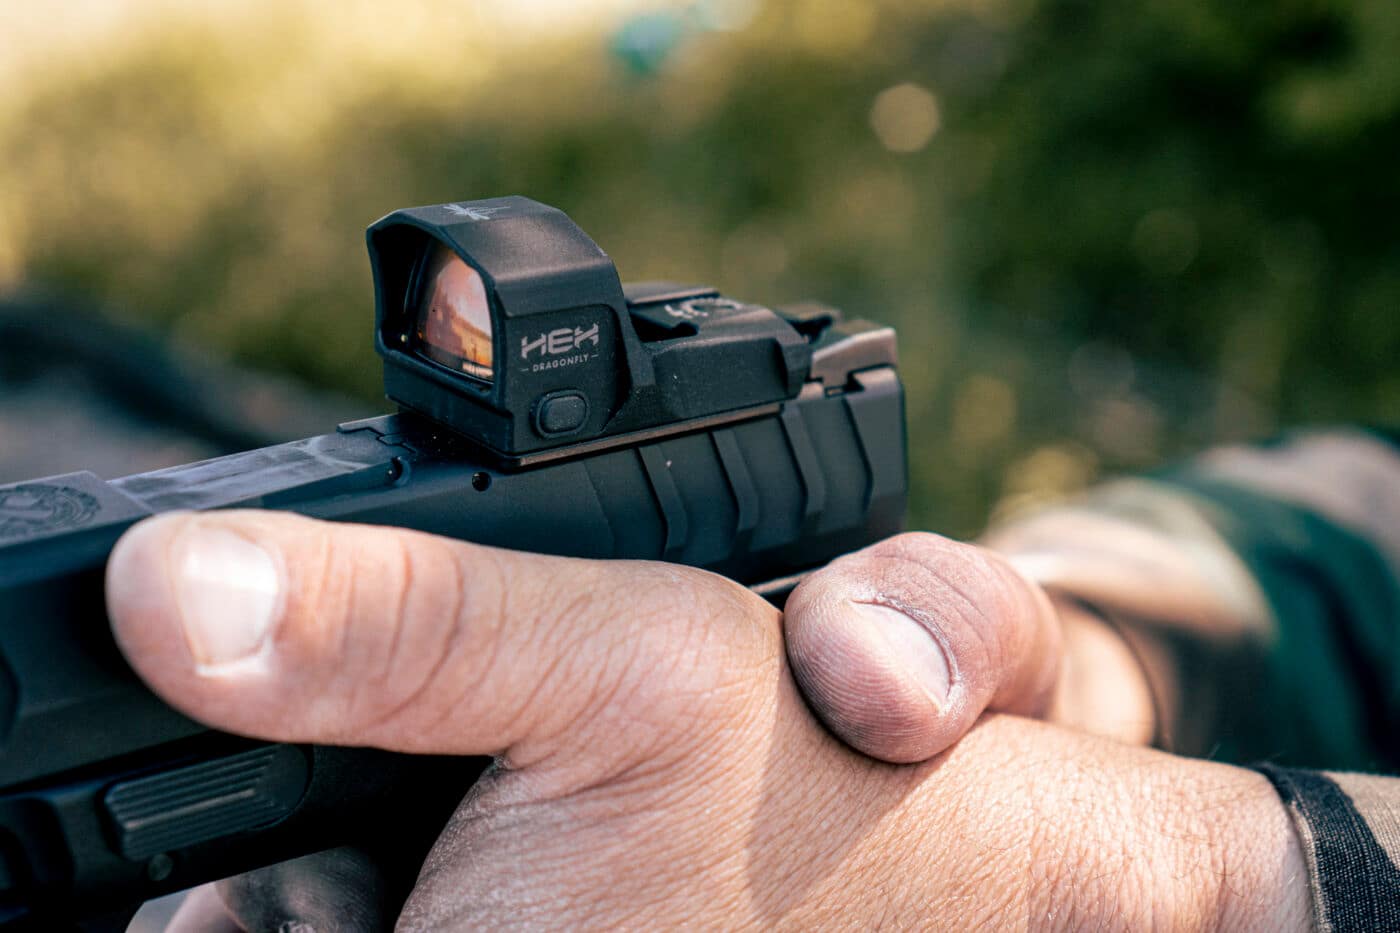 HEX Dragonfly optic on an XD-M Elite pistol